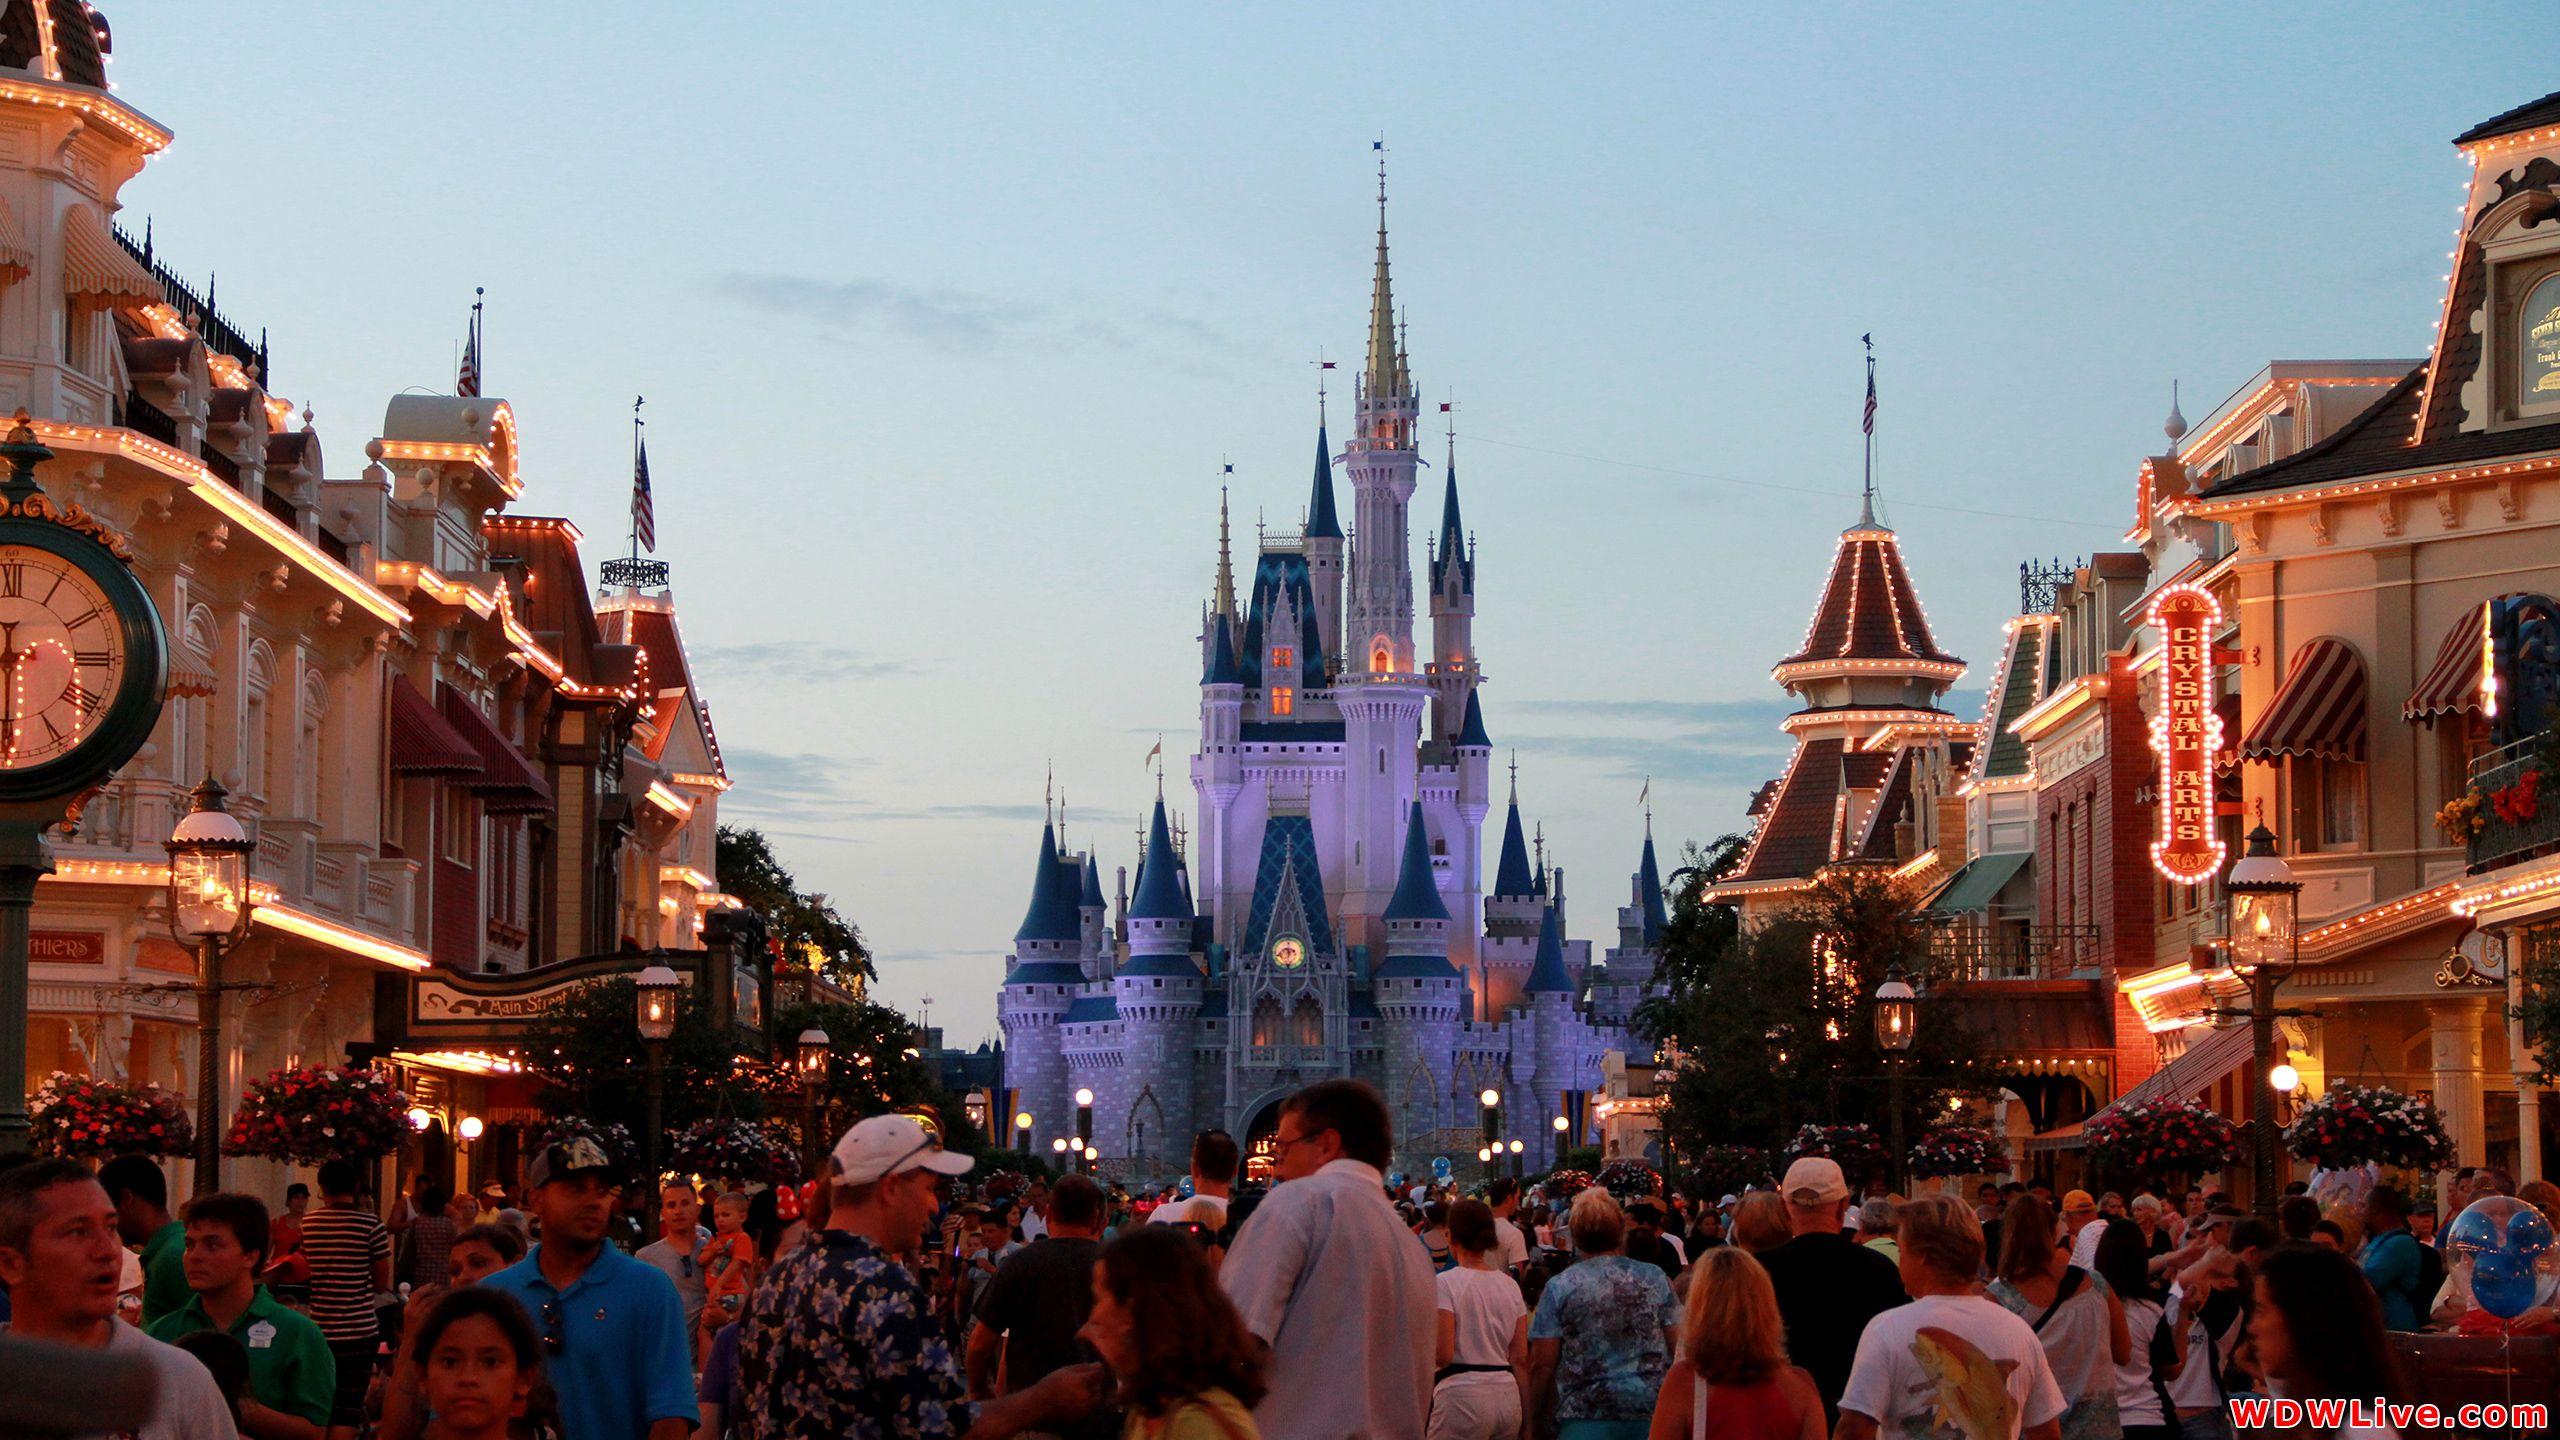 Cinderella Castle: Dusk sets on Main Street U.S.A. and Cinderella